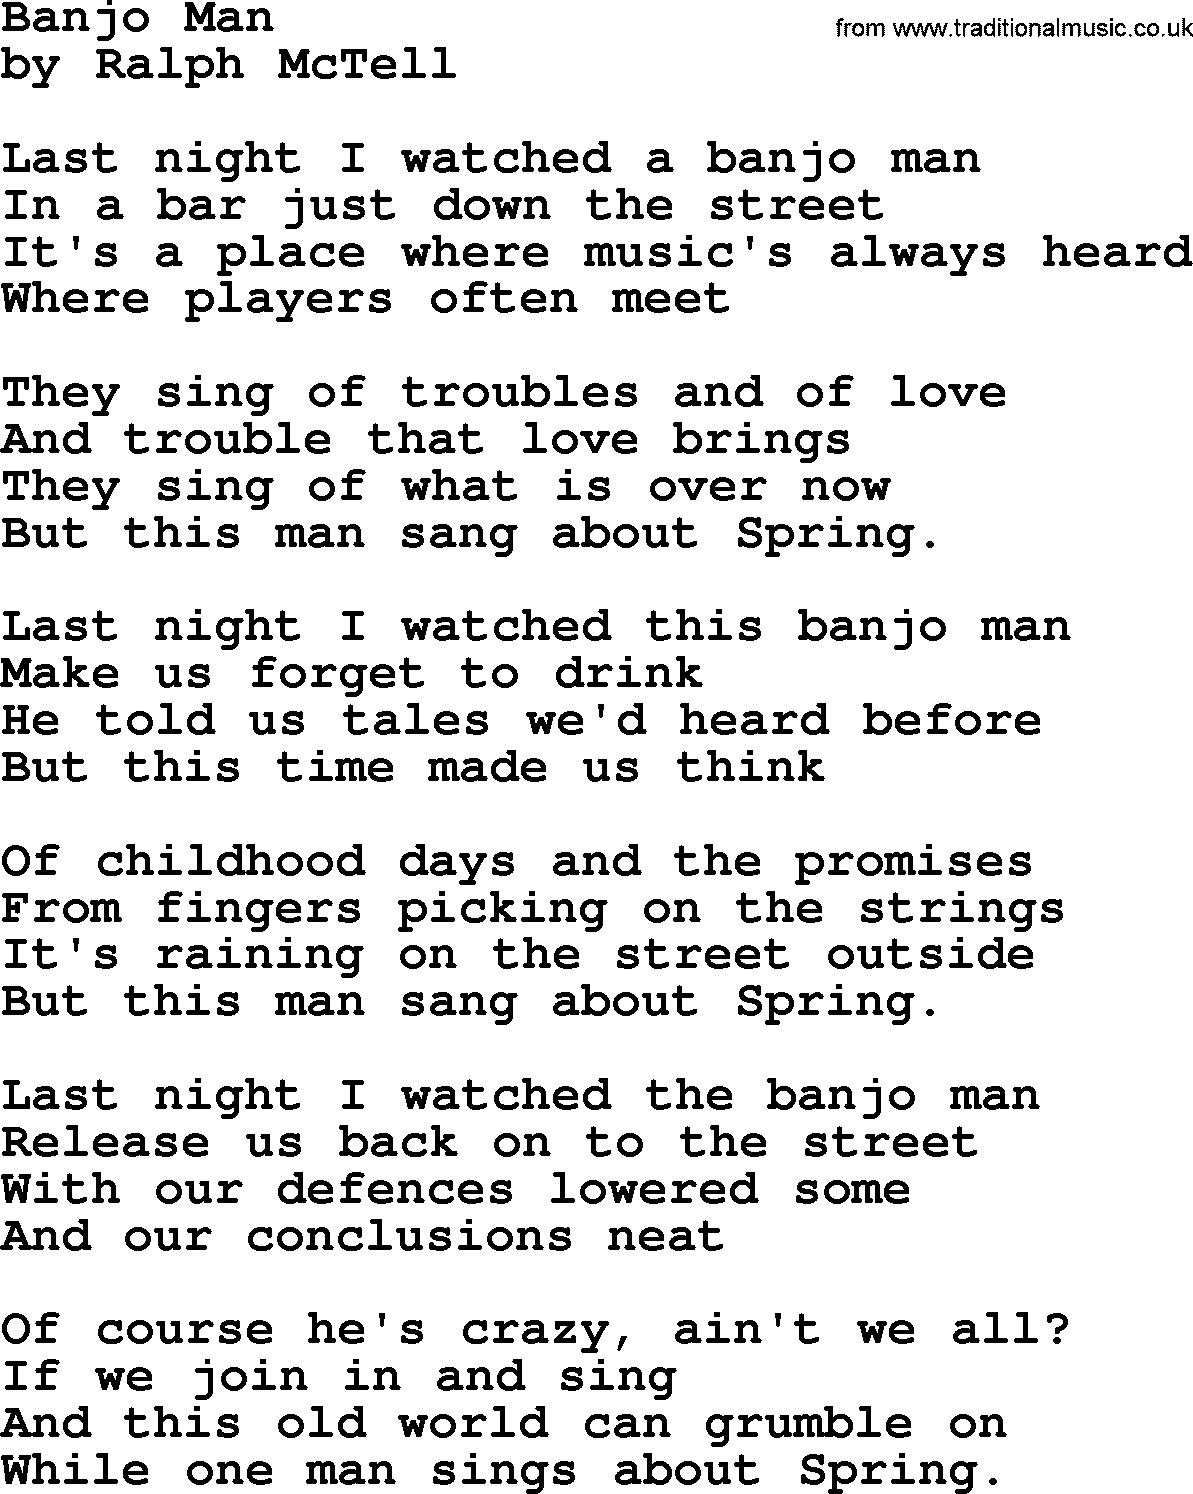 Ralph McTell Song: Banjo Man, lyrics